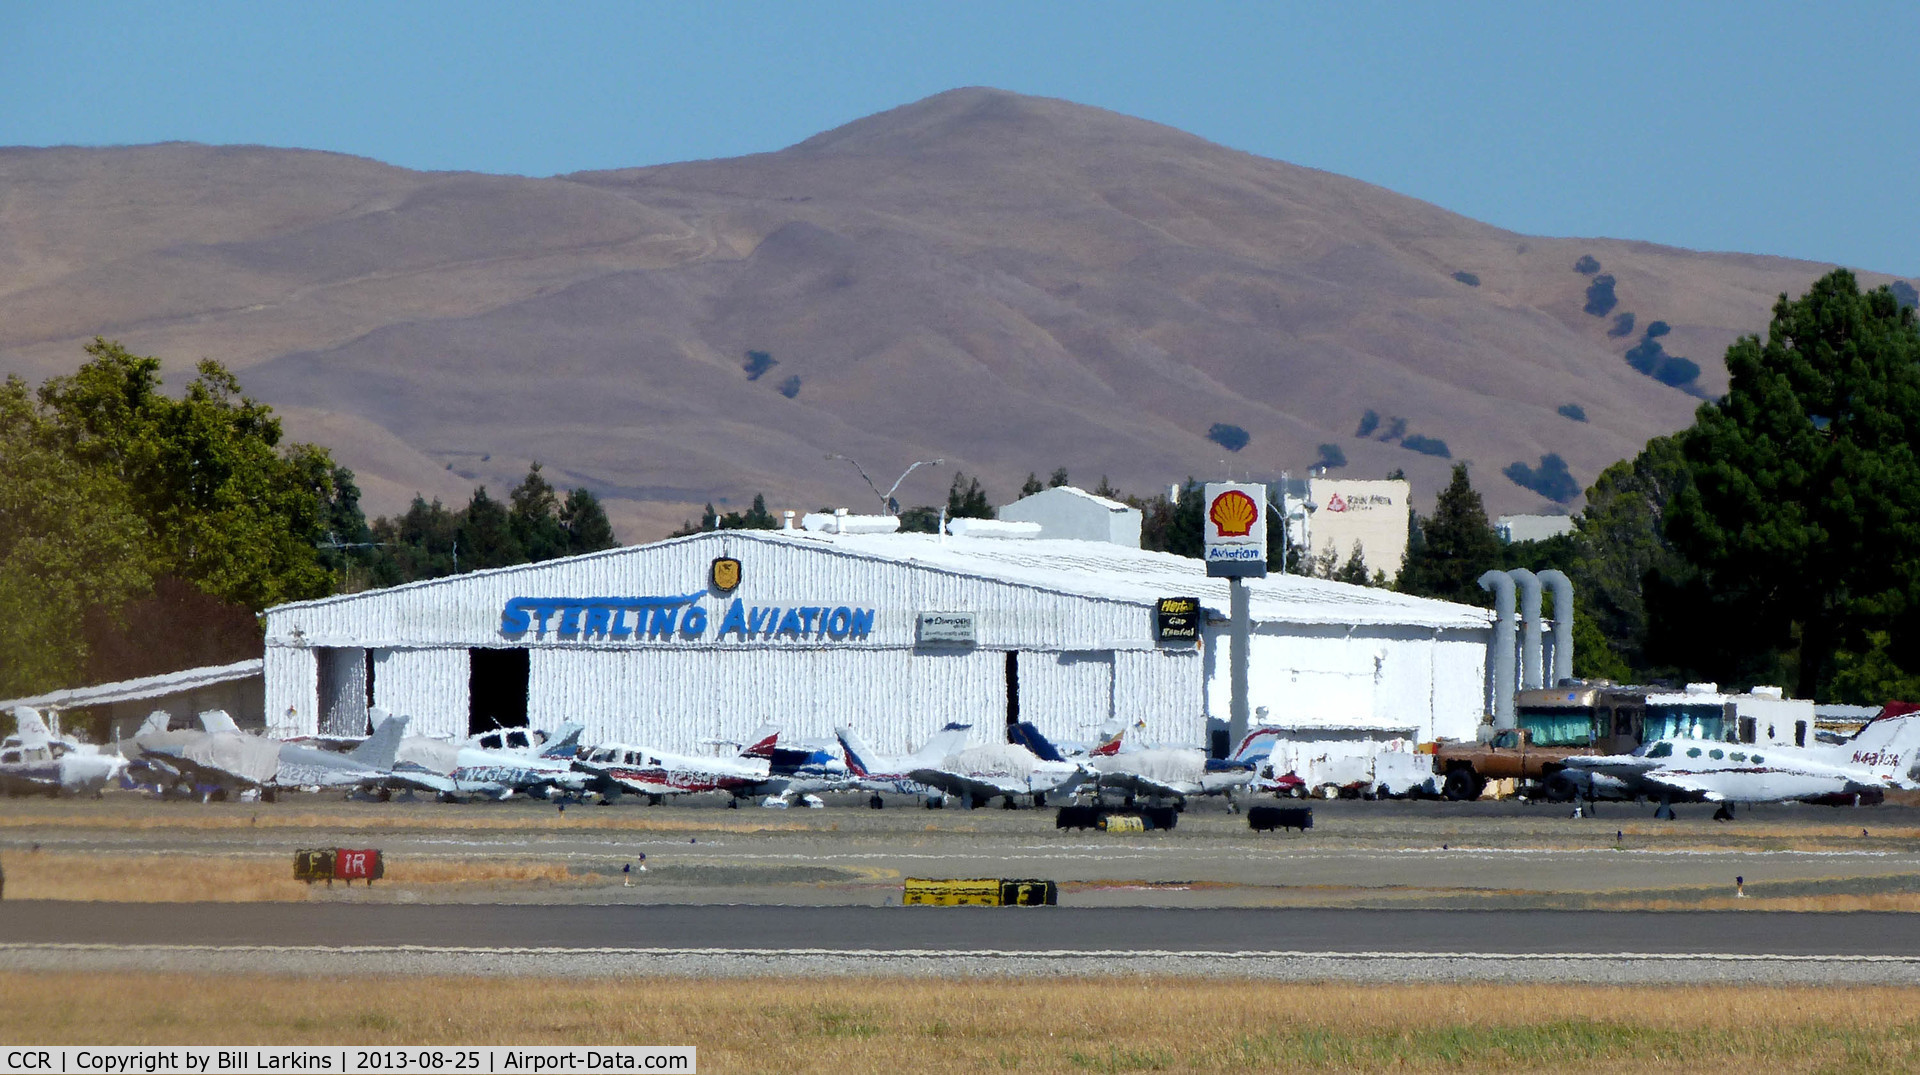 Buchanan Field Airport (CCR) - Sterling Aviation hangar and ramp area.